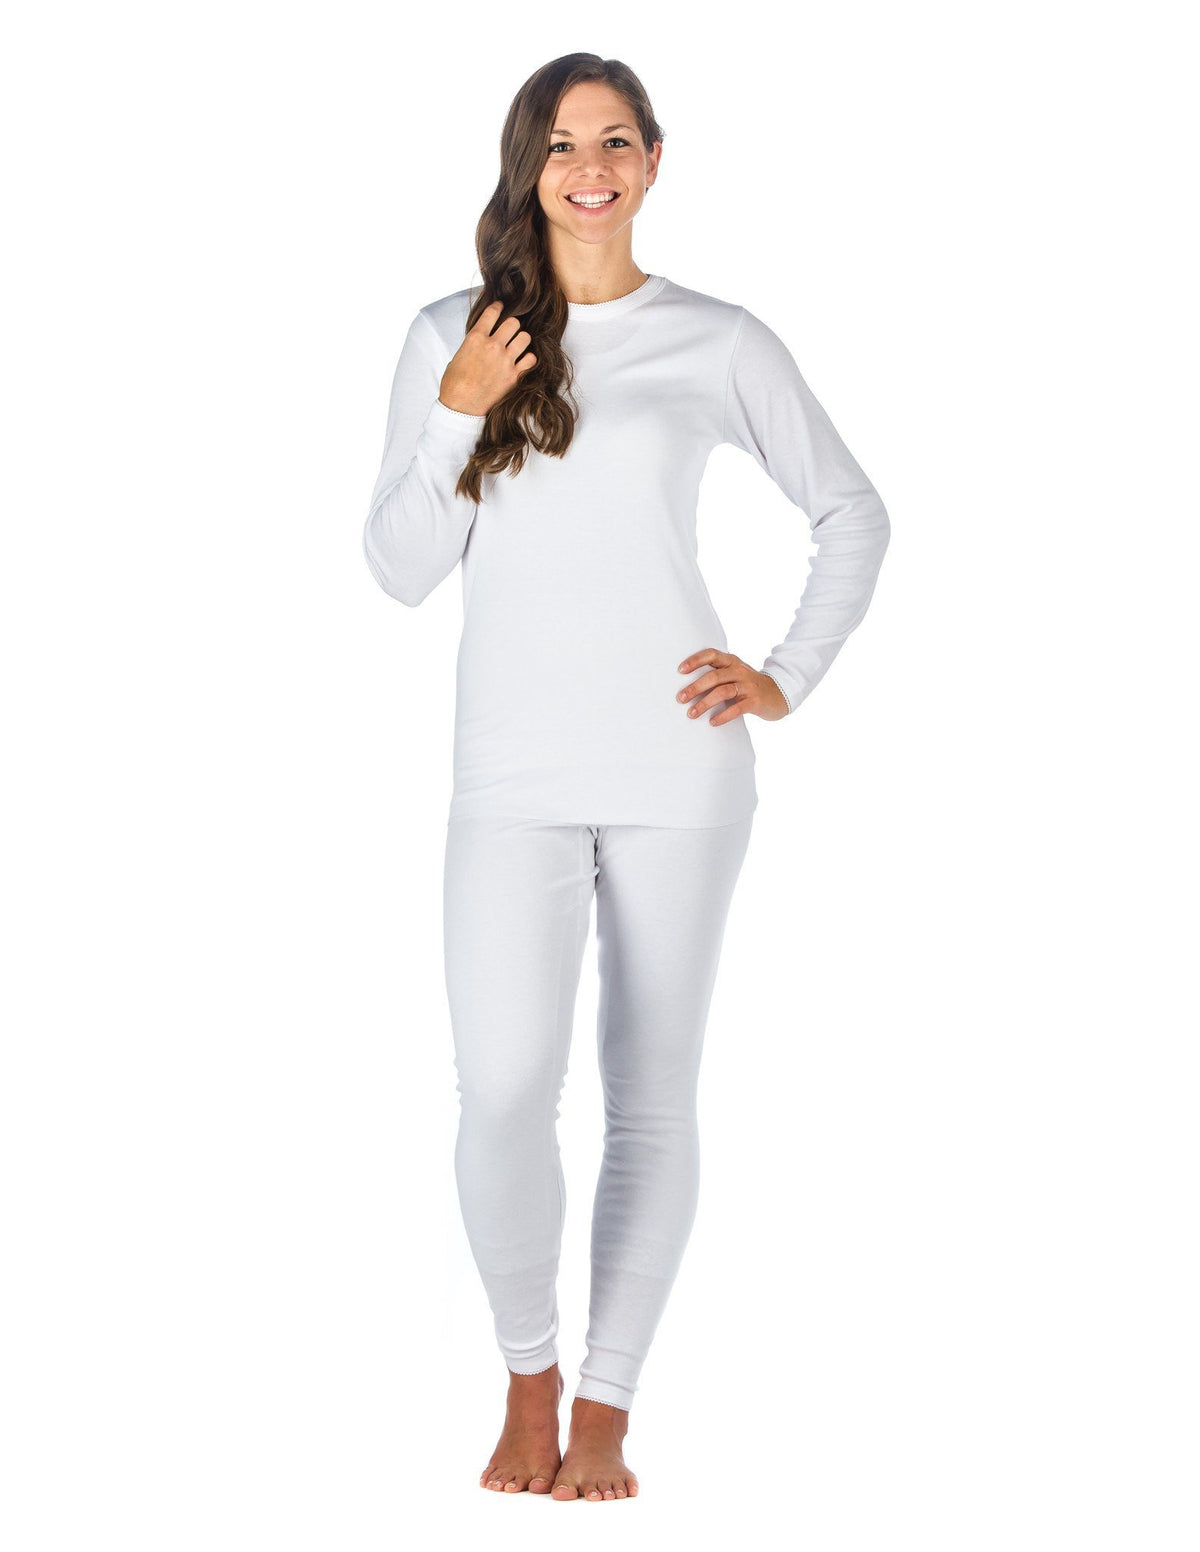 Women's 'Soft Comfort' Premium Thermal Set - White